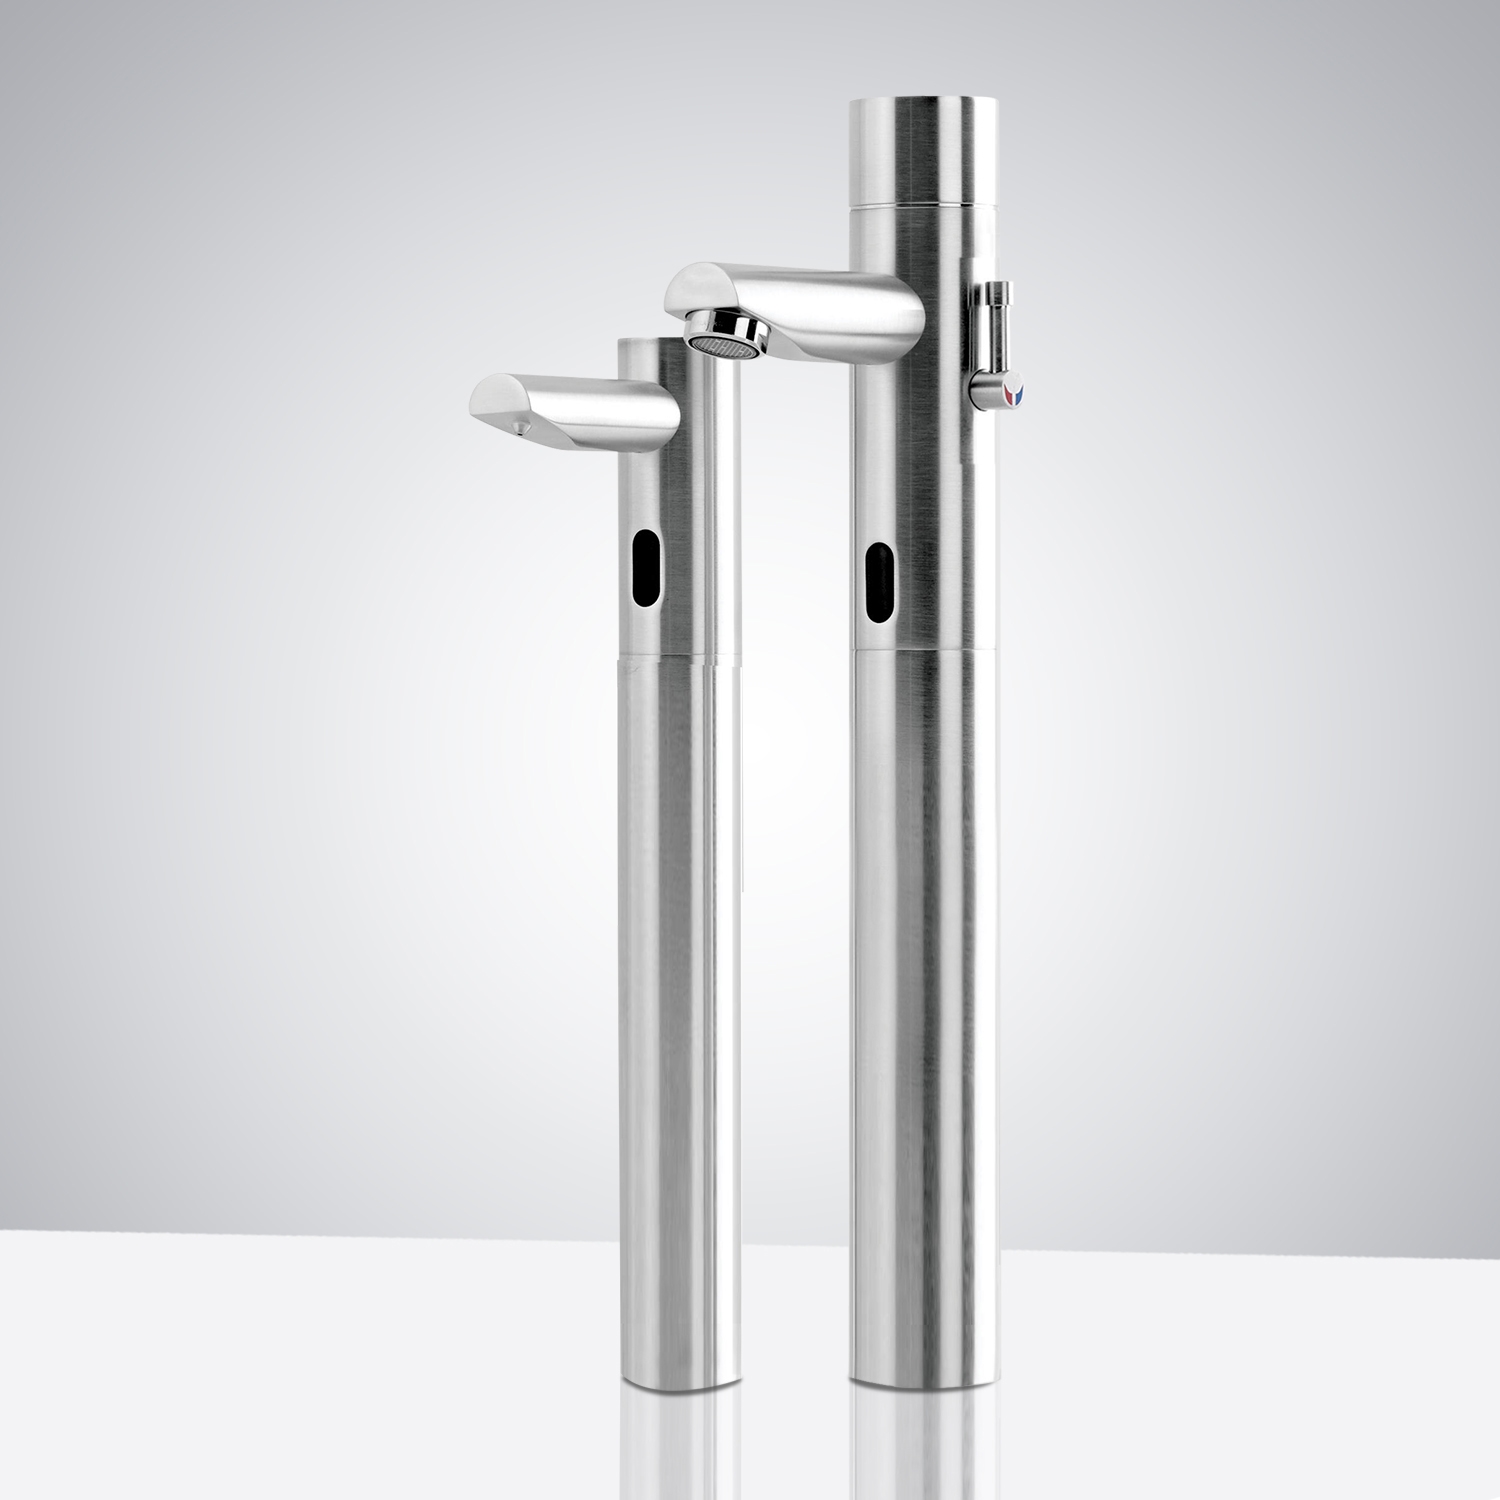 Fontana Verona Automatic Motion Sensor Faucet & Automatic Soap Dispenser for Restrooms